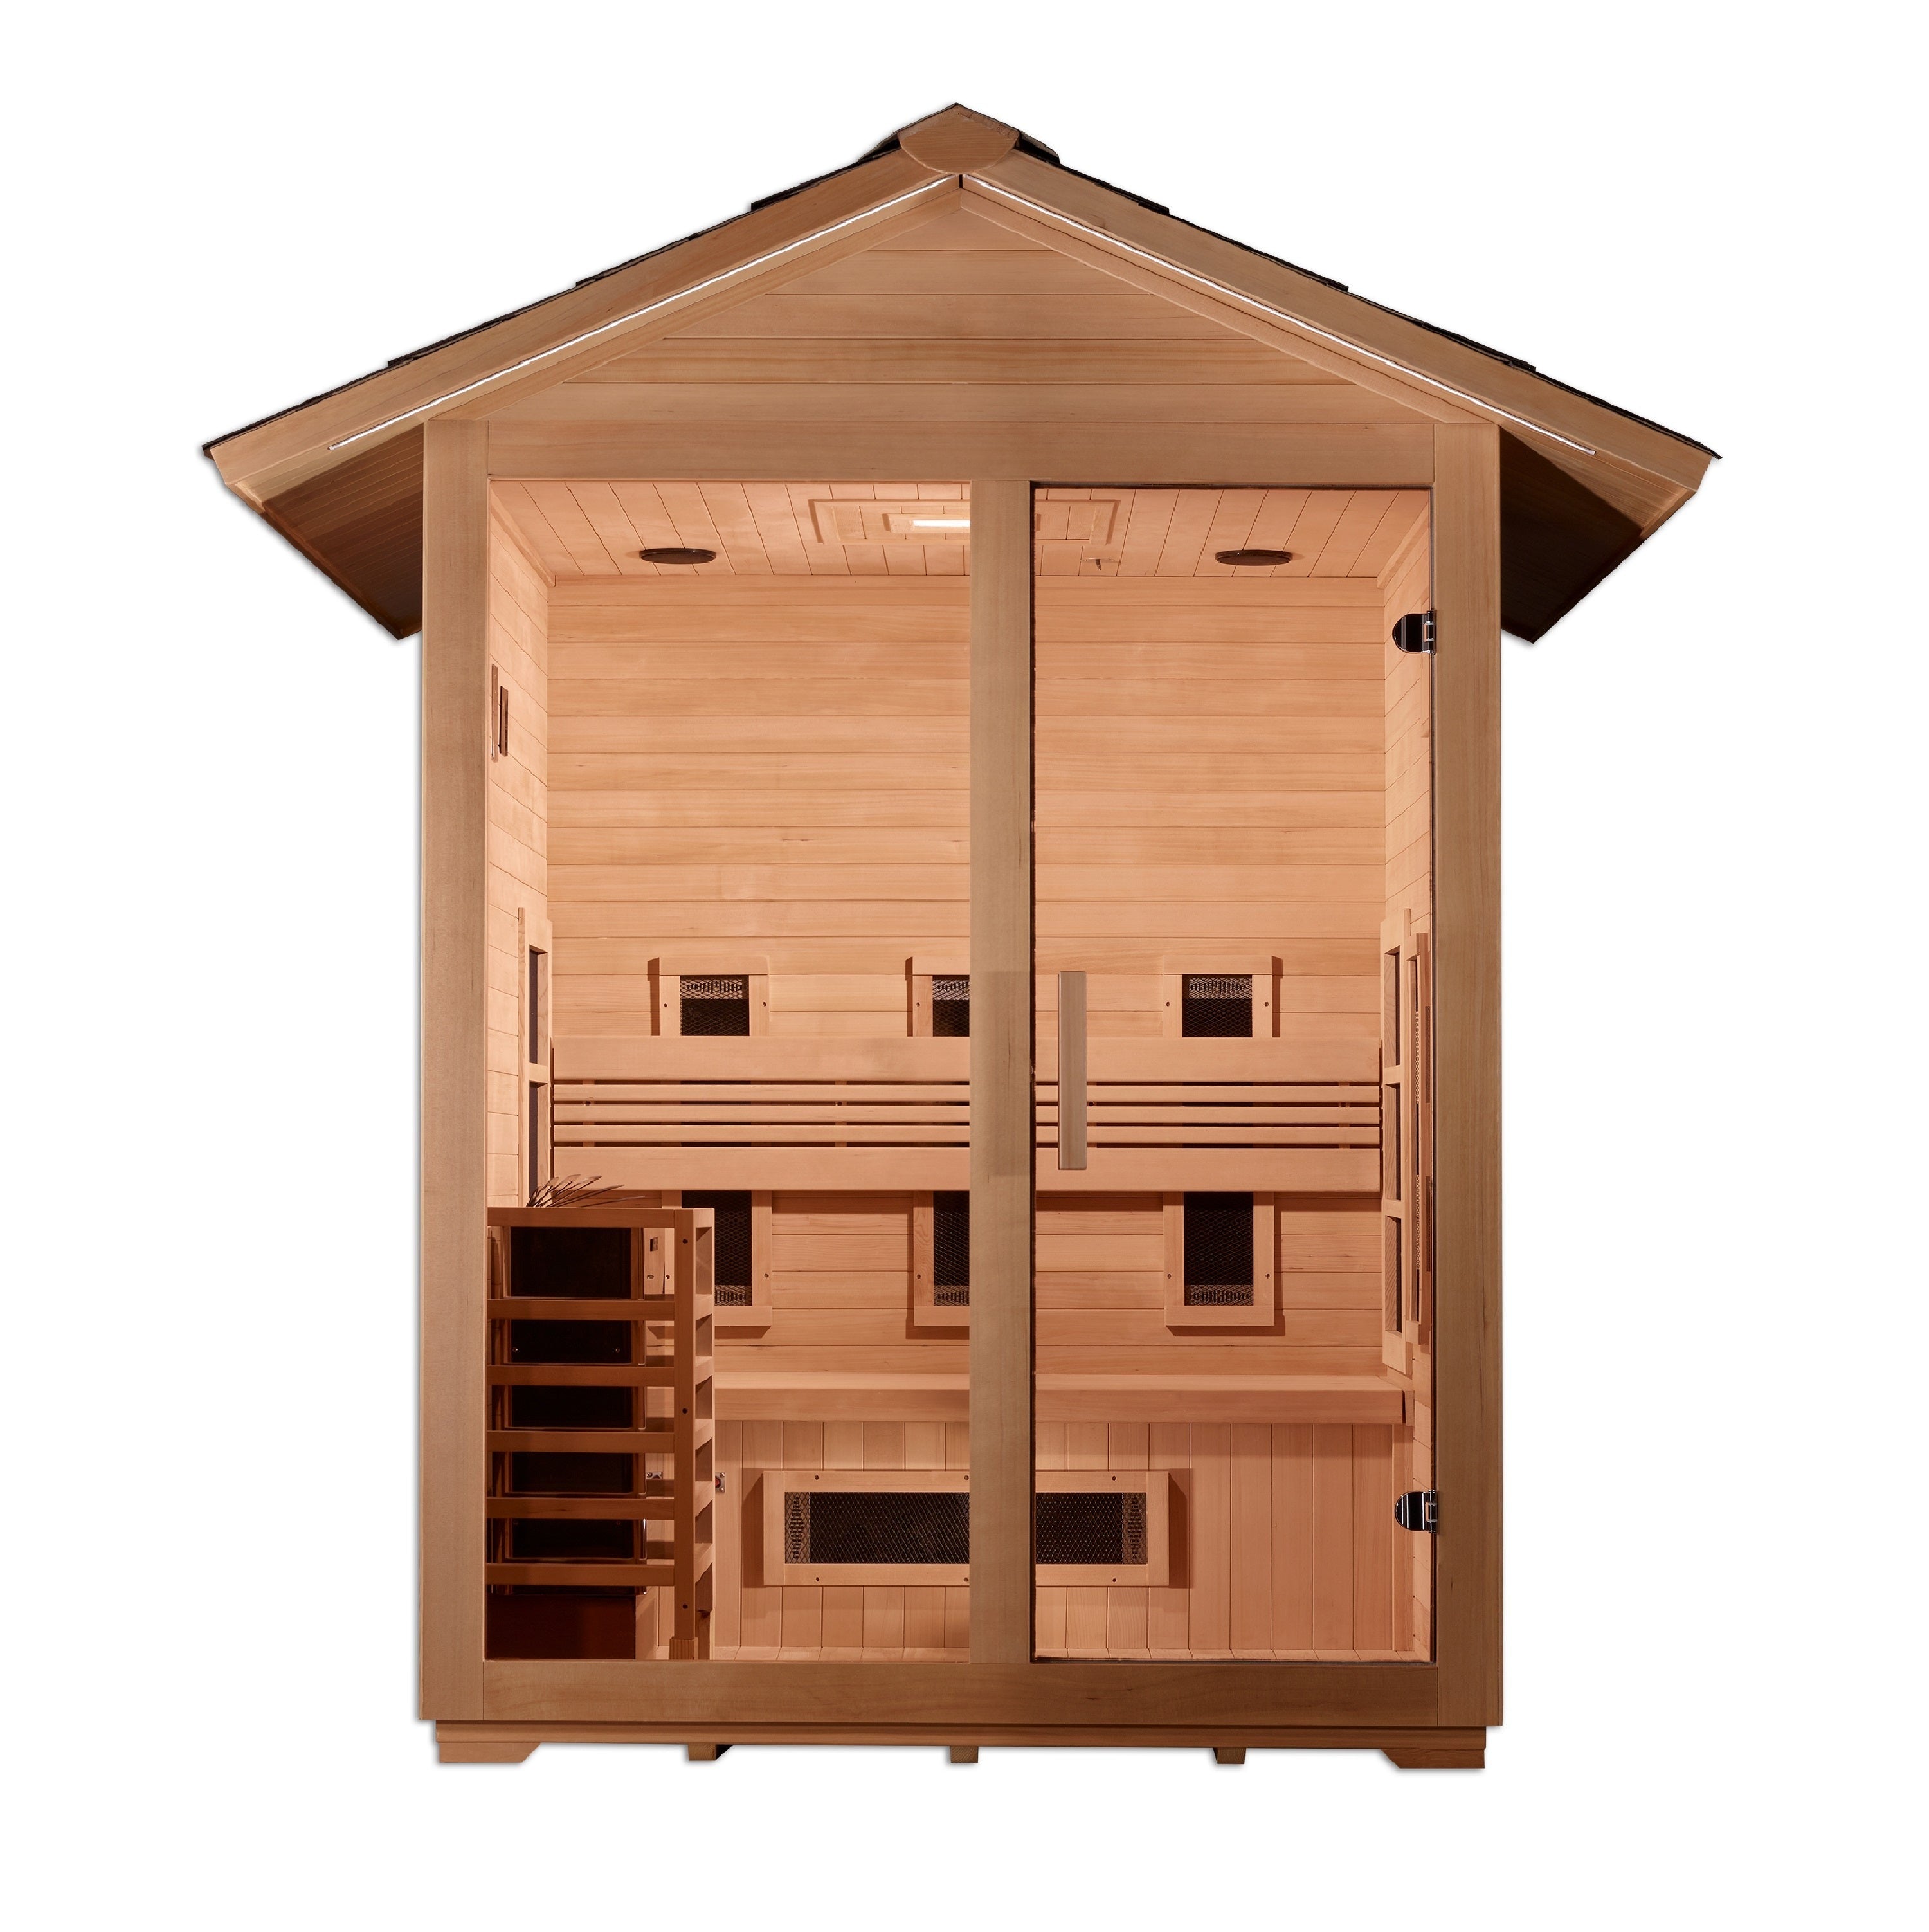 Golden Designs Sauna "Carinthia" 3 Person Hybrid outdoor sauna.